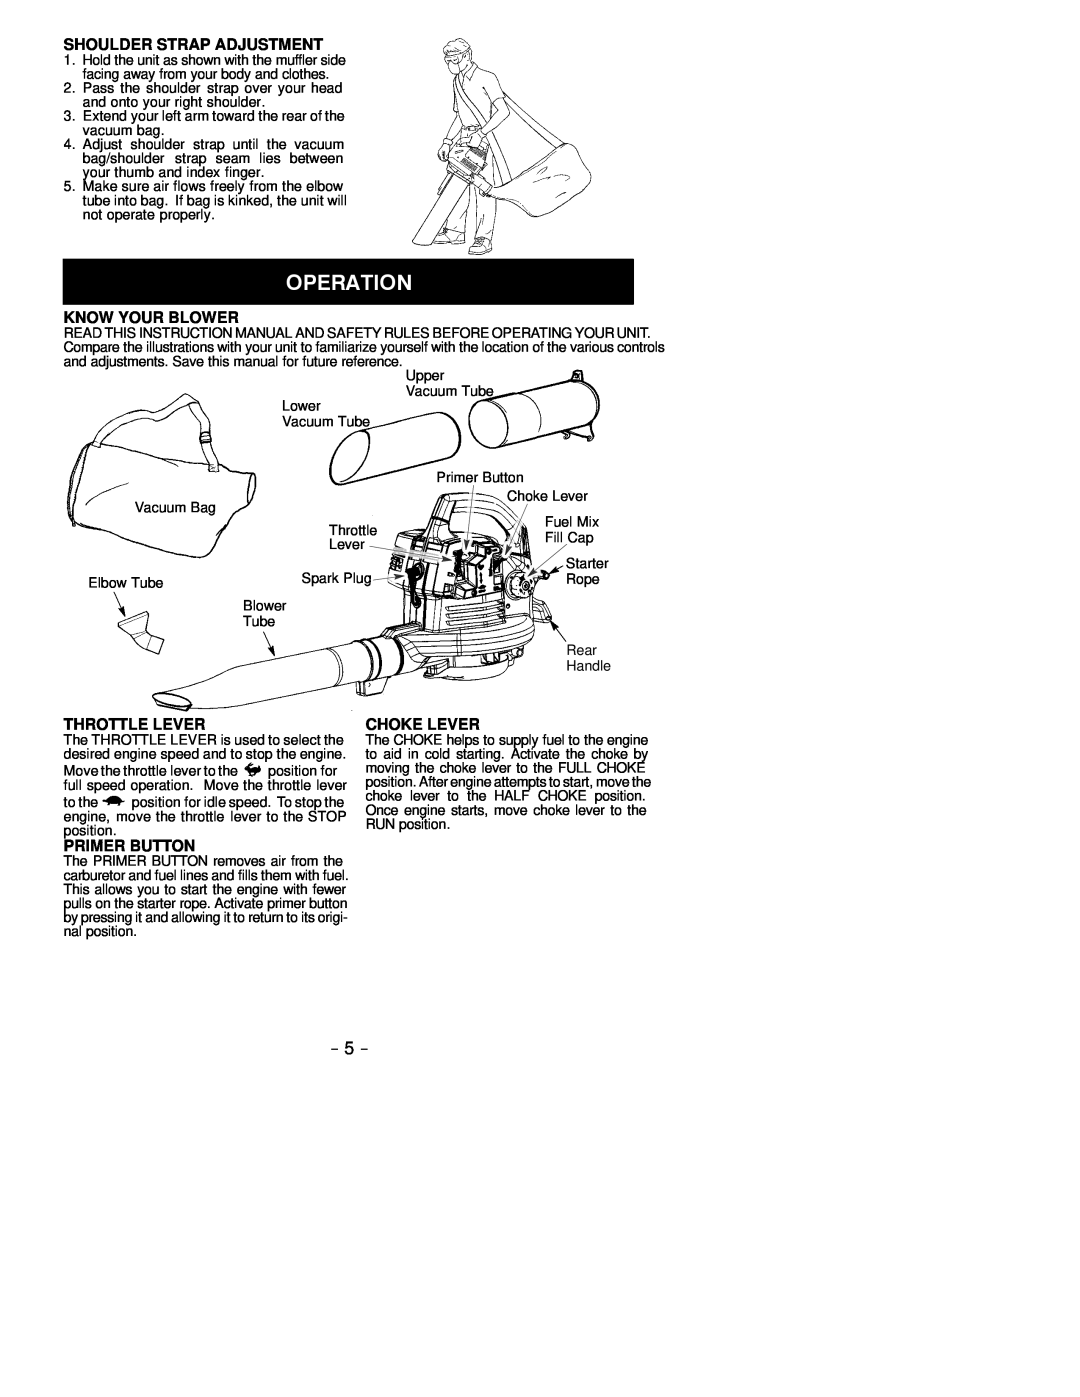 Poulan 530163809 instruction manual Shoulder Strap Adjustment, Know Your Blower, Throttle Lever, Primer Button, Choke Lever 